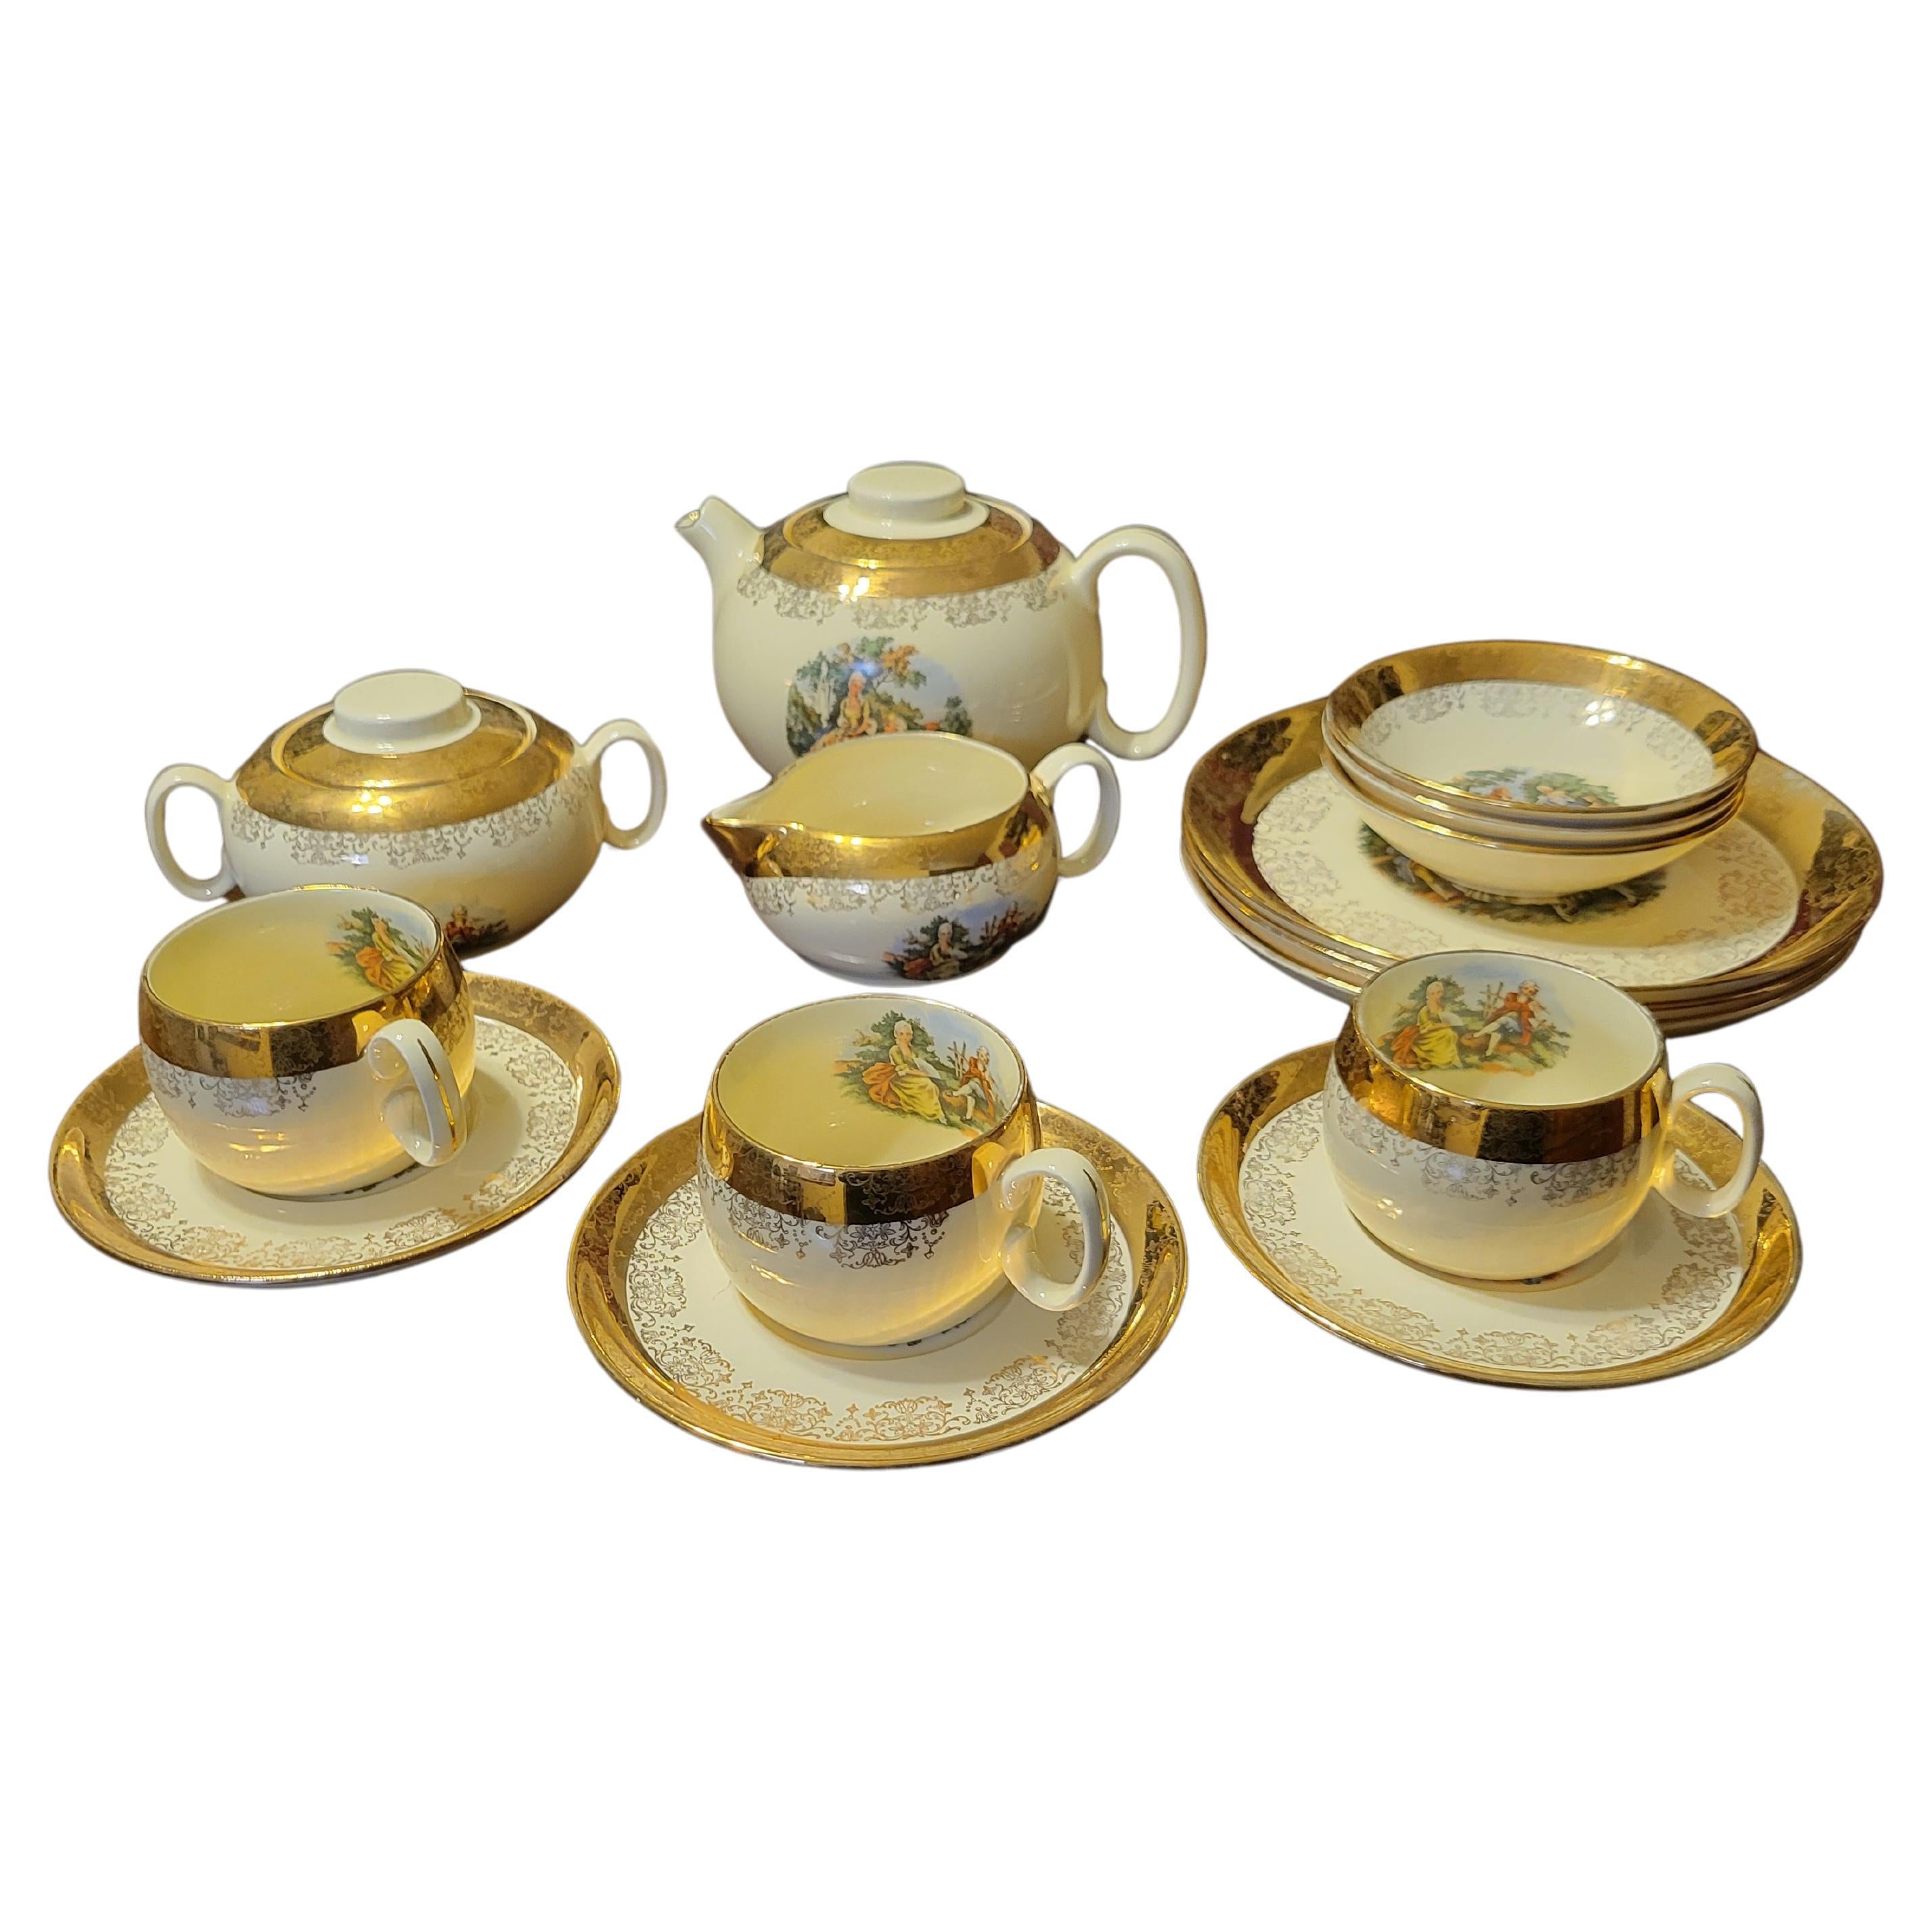 Sabin Crest-o-Gold 22K China Set with Teapot - 15 Pieces